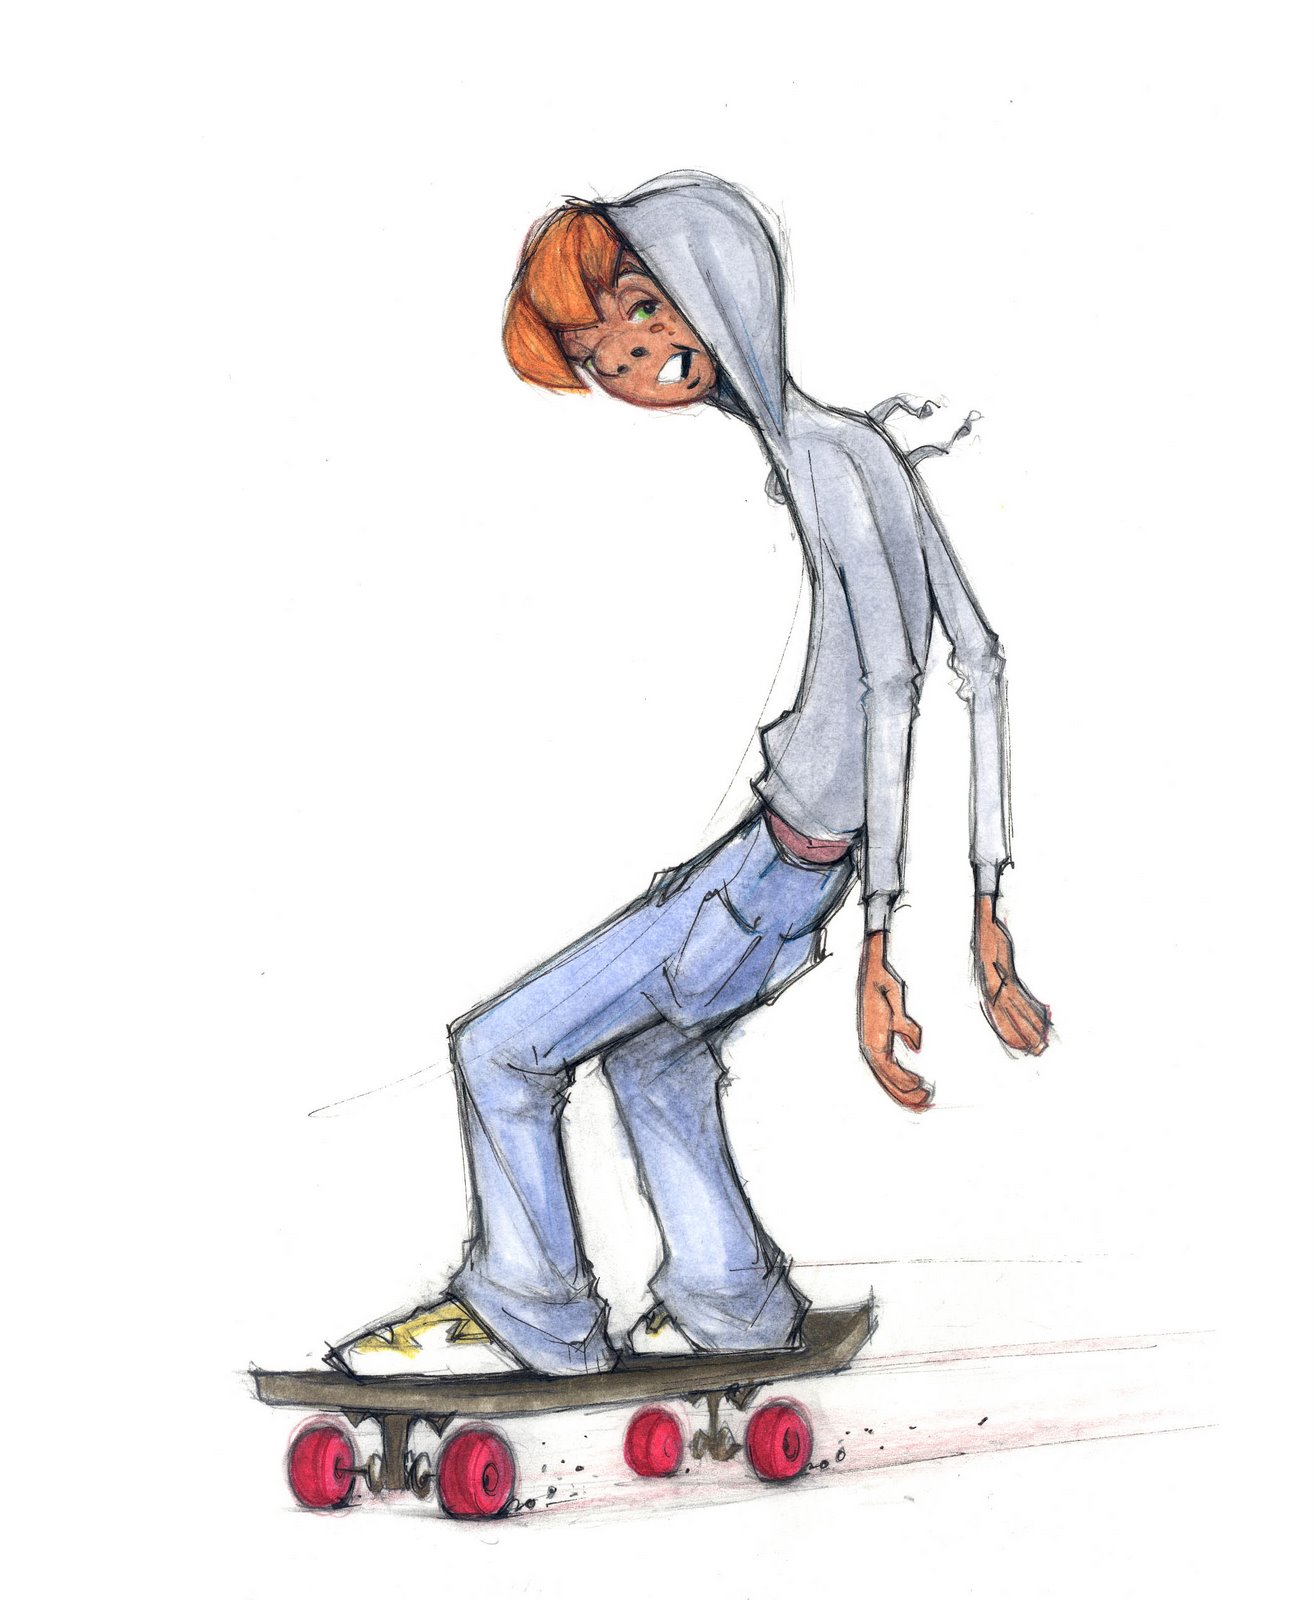 [Dude+on+skateboard+copy.jpg]